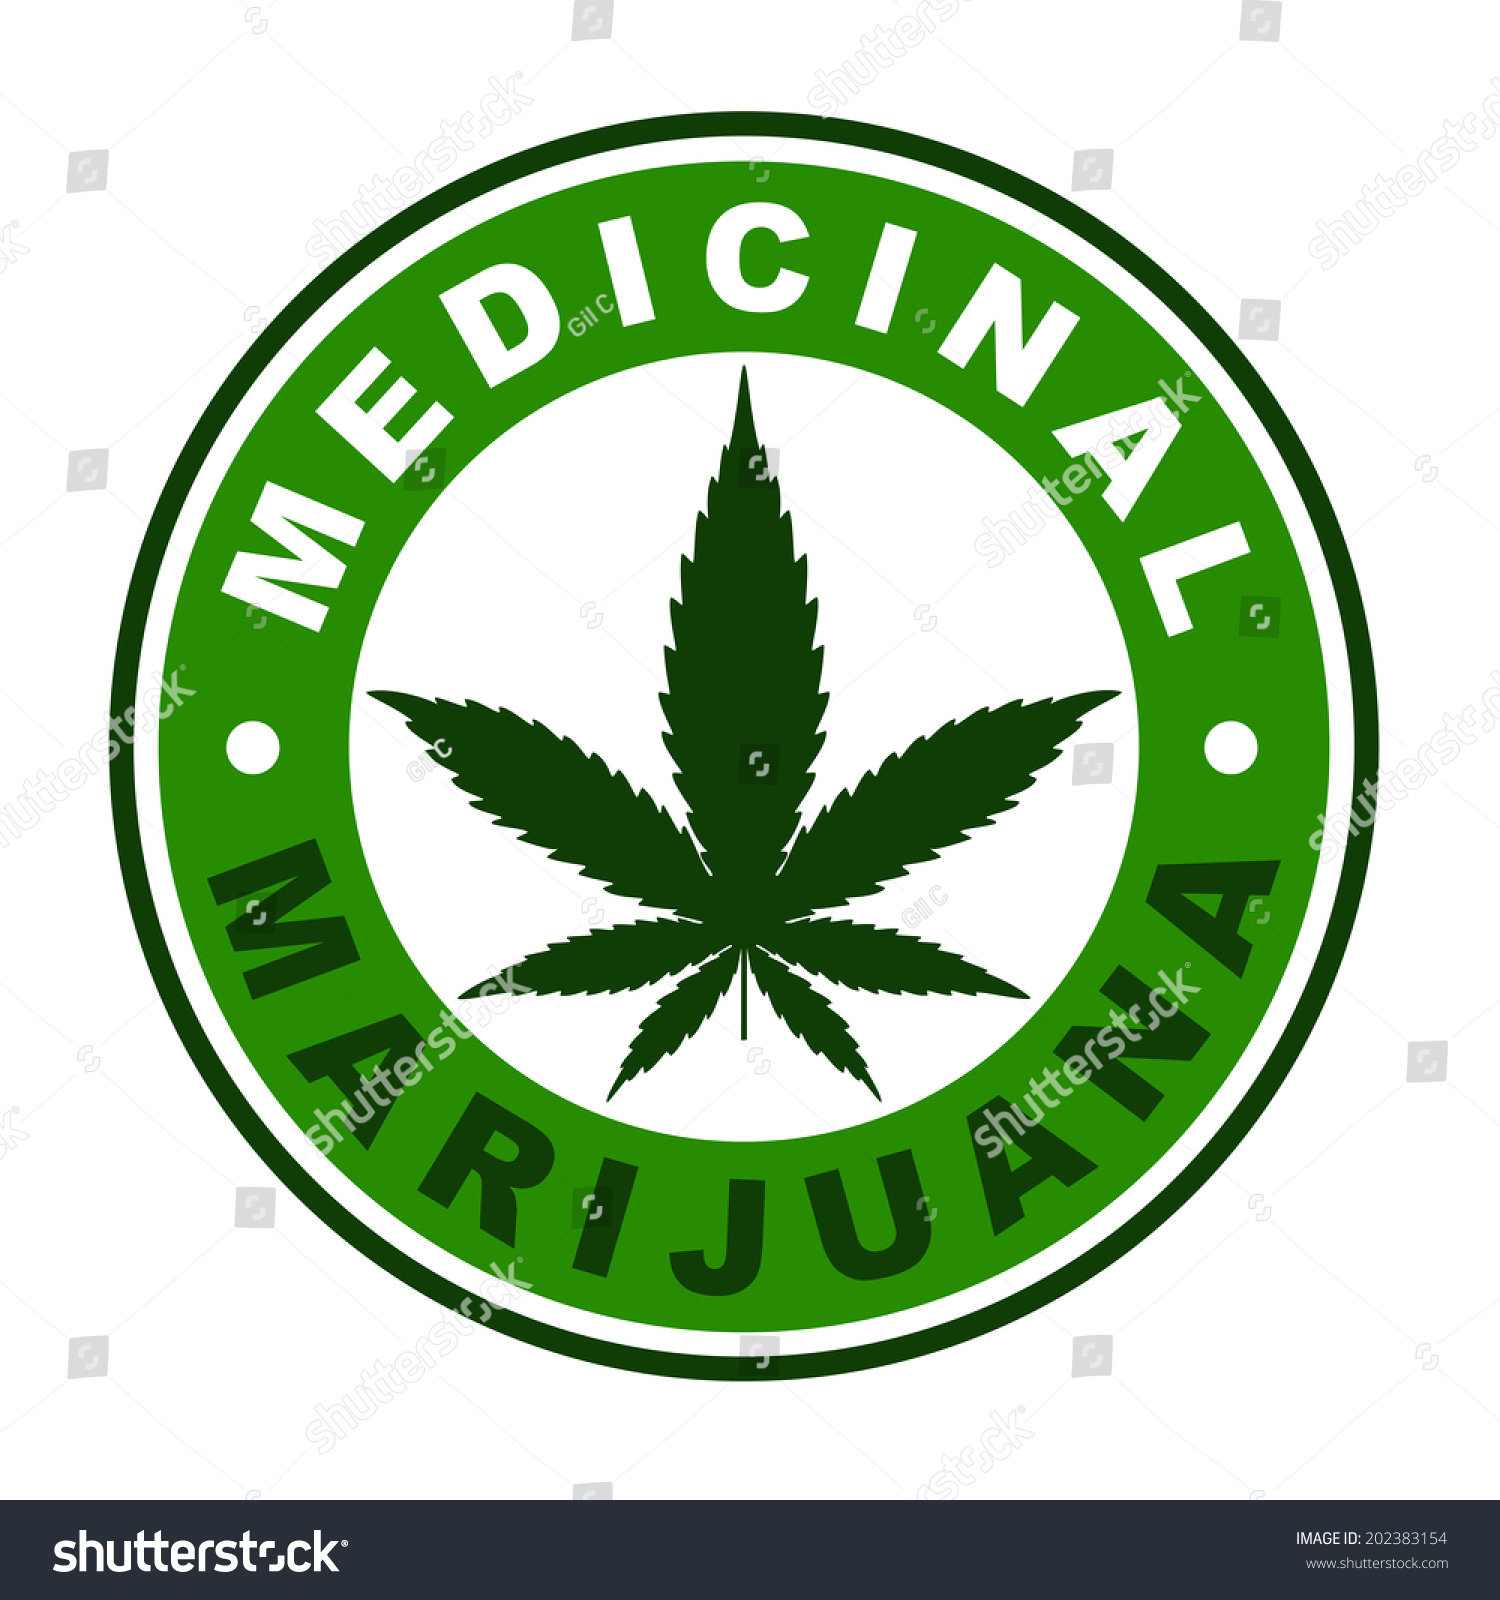 Medicinal Marijuana Label Stock Photo (Photo, Vector, Illustration ...